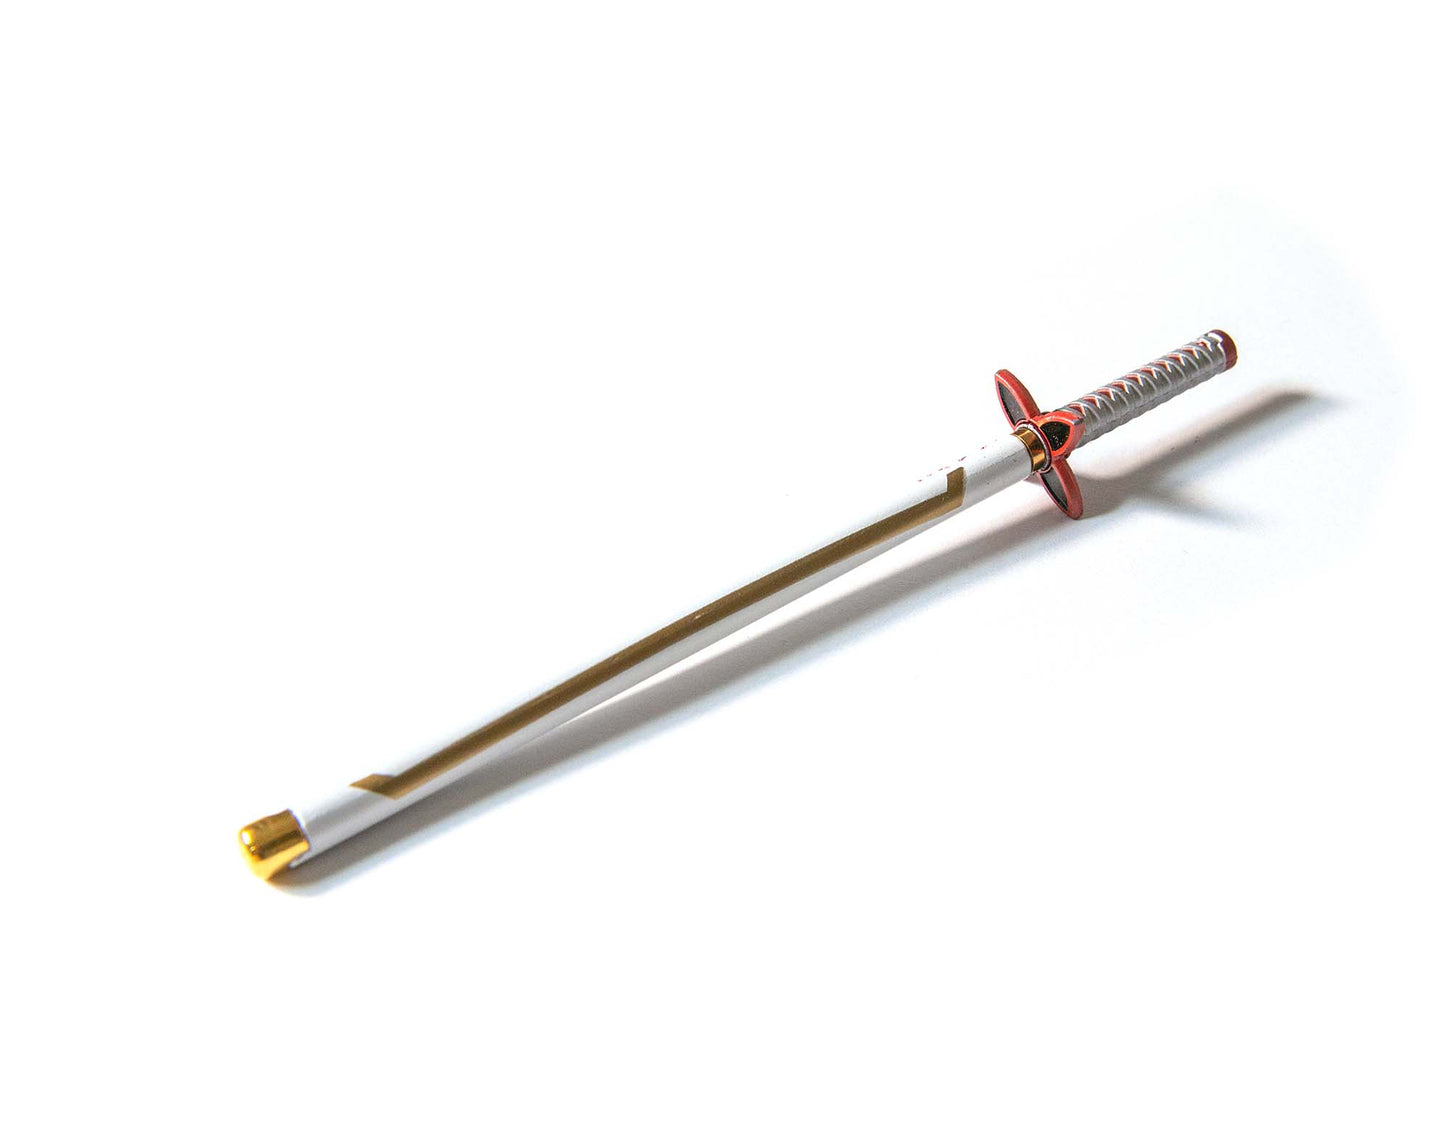 CC02-06 Demon Slayer Kochō Shinobu sword pen